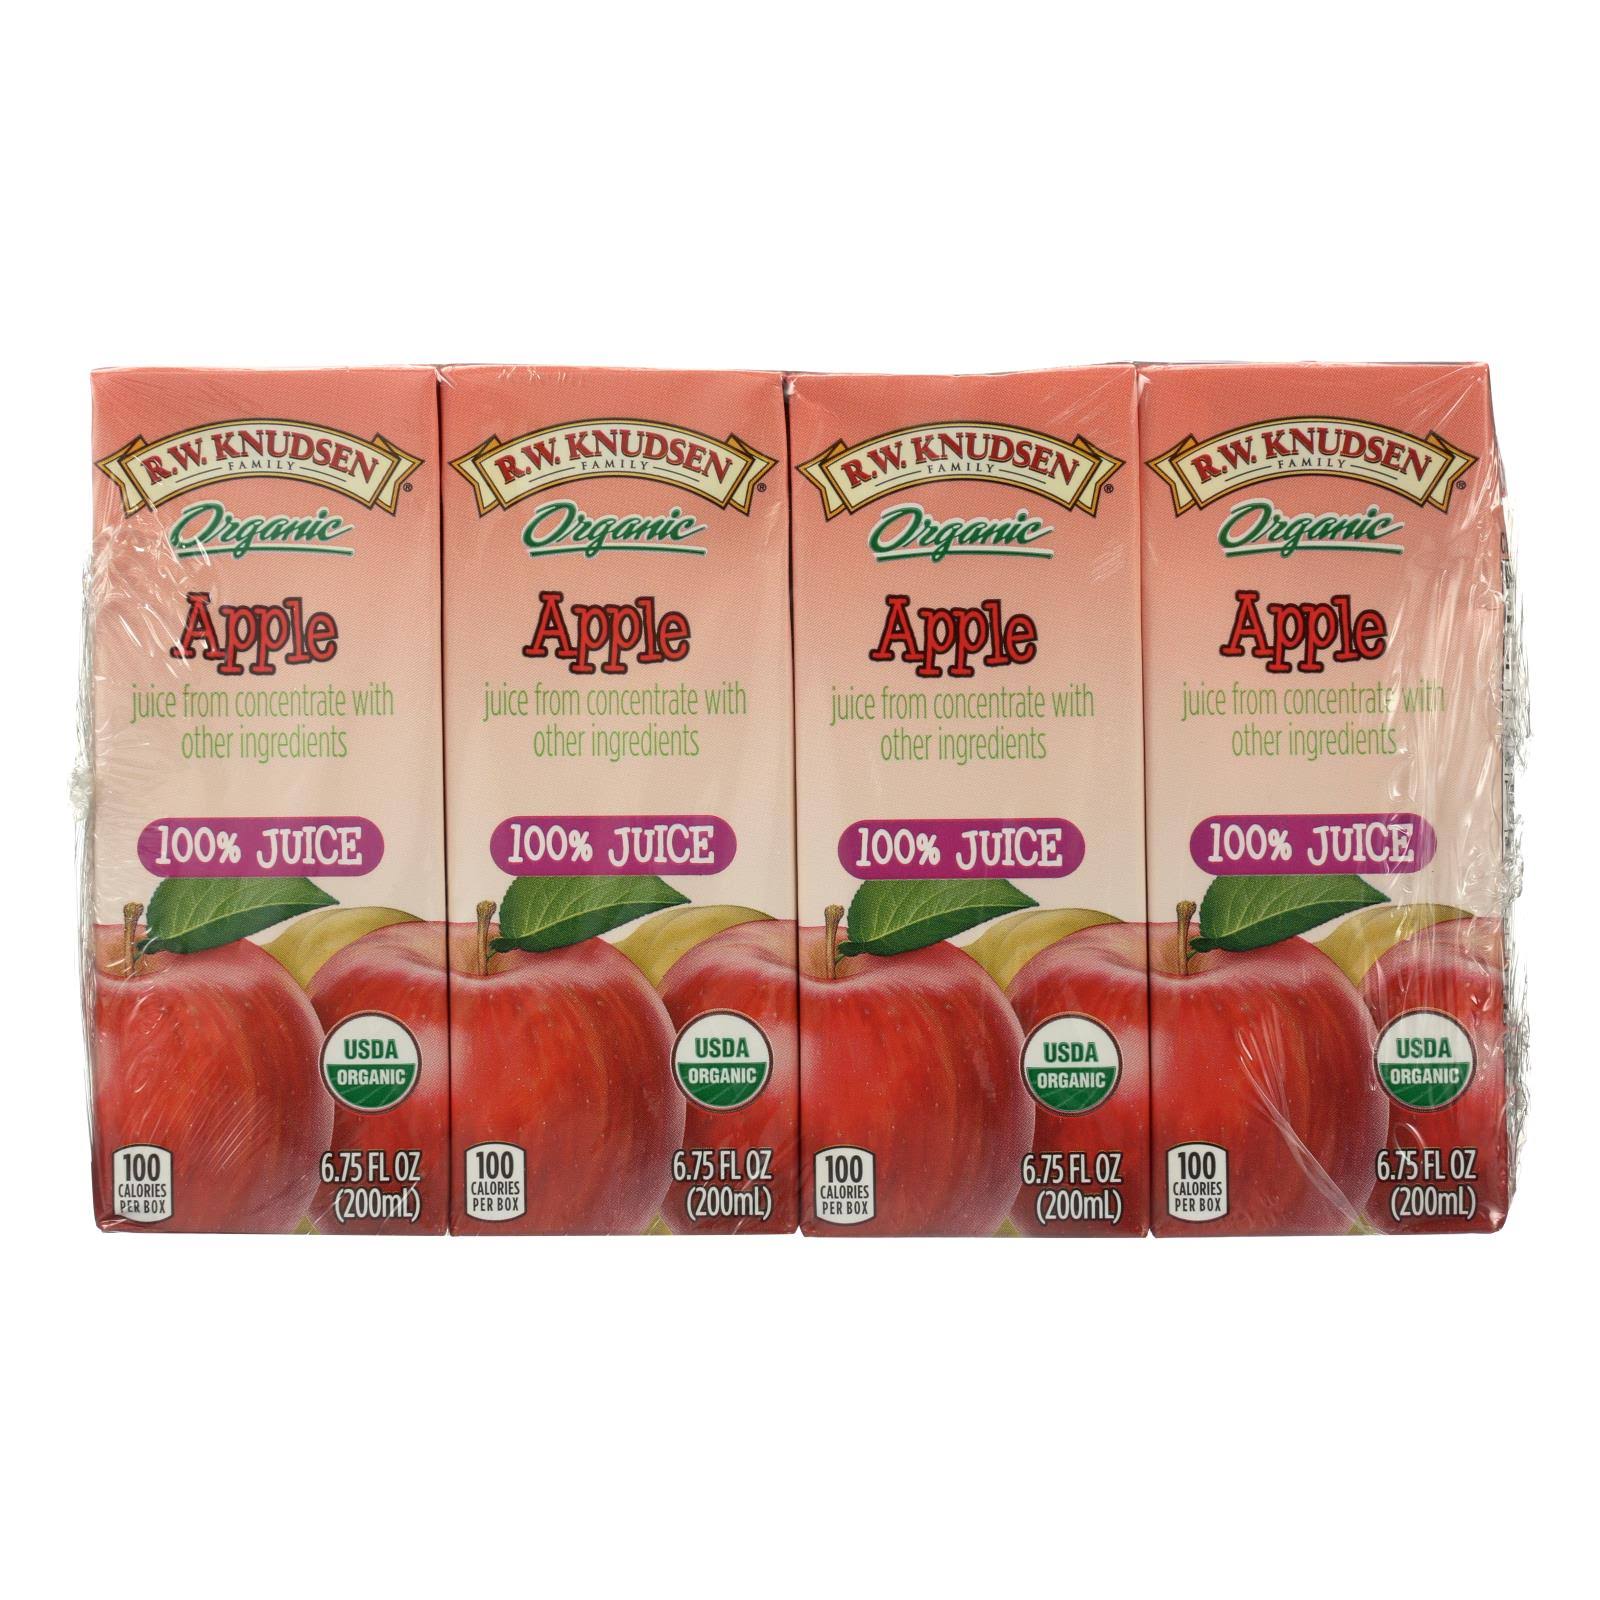 RW Knudsen Organic 100% Juice, Apple - 4 pack, 6.75 fl oz boxes